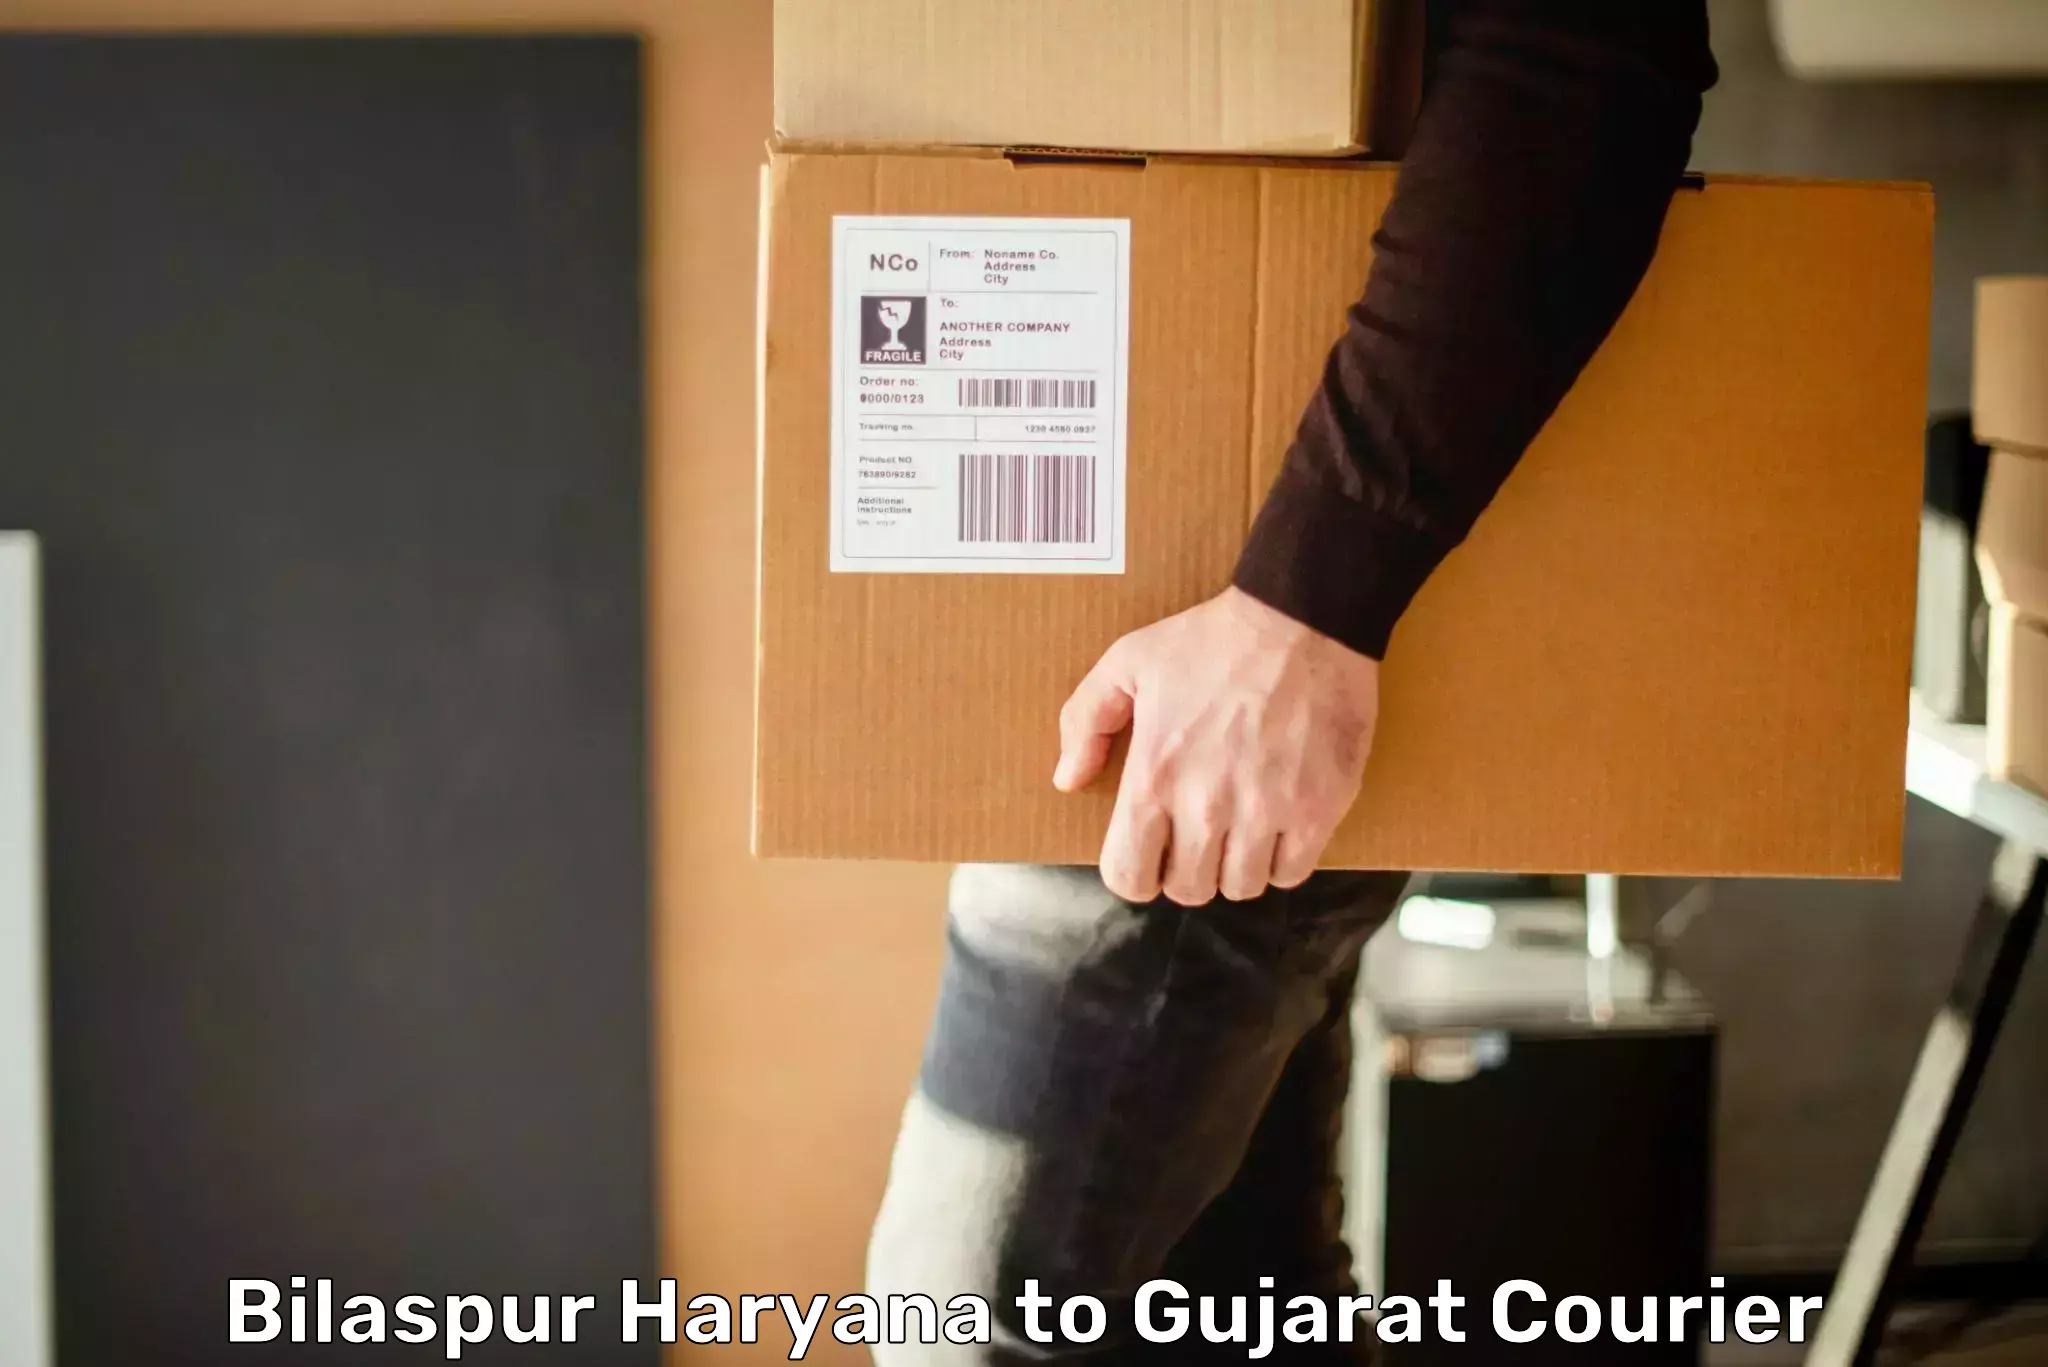 Digital courier platforms Bilaspur Haryana to Veraval